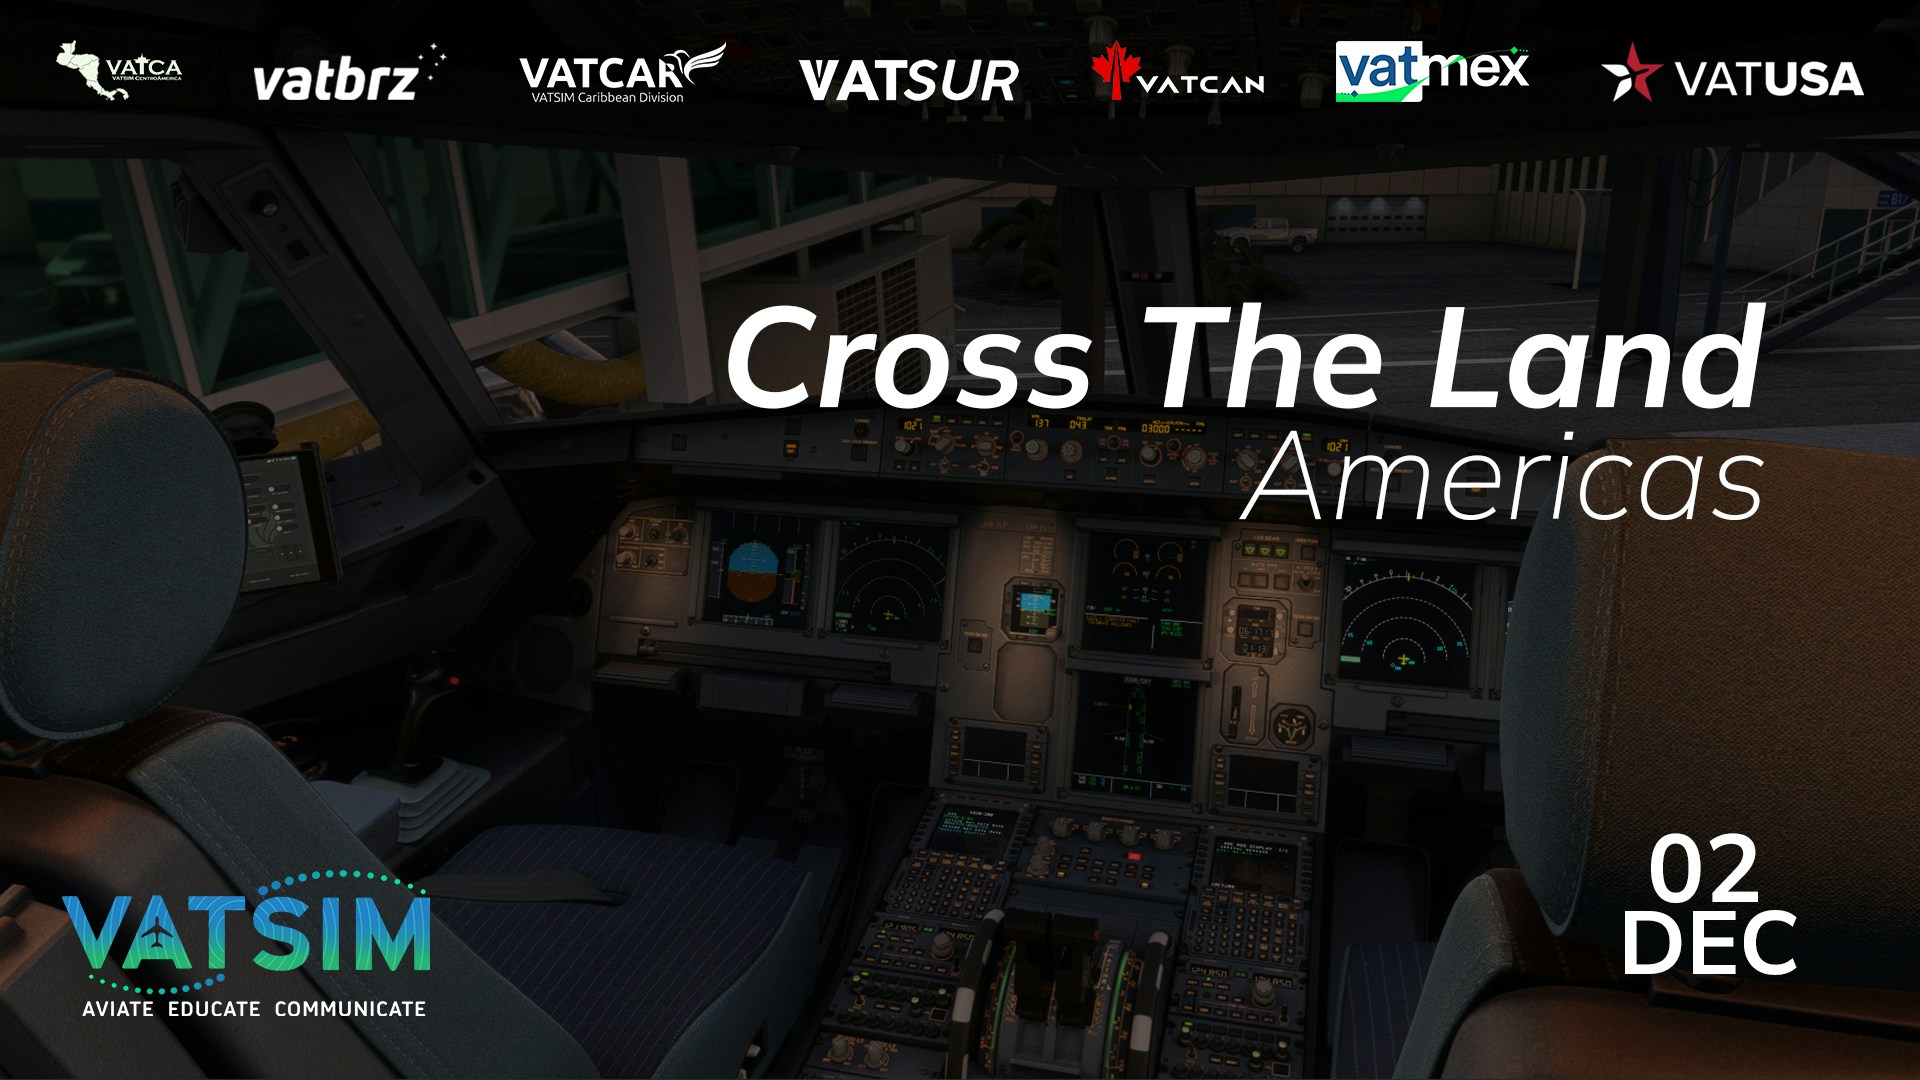 VATSIM Cross The Land: Americas Announced